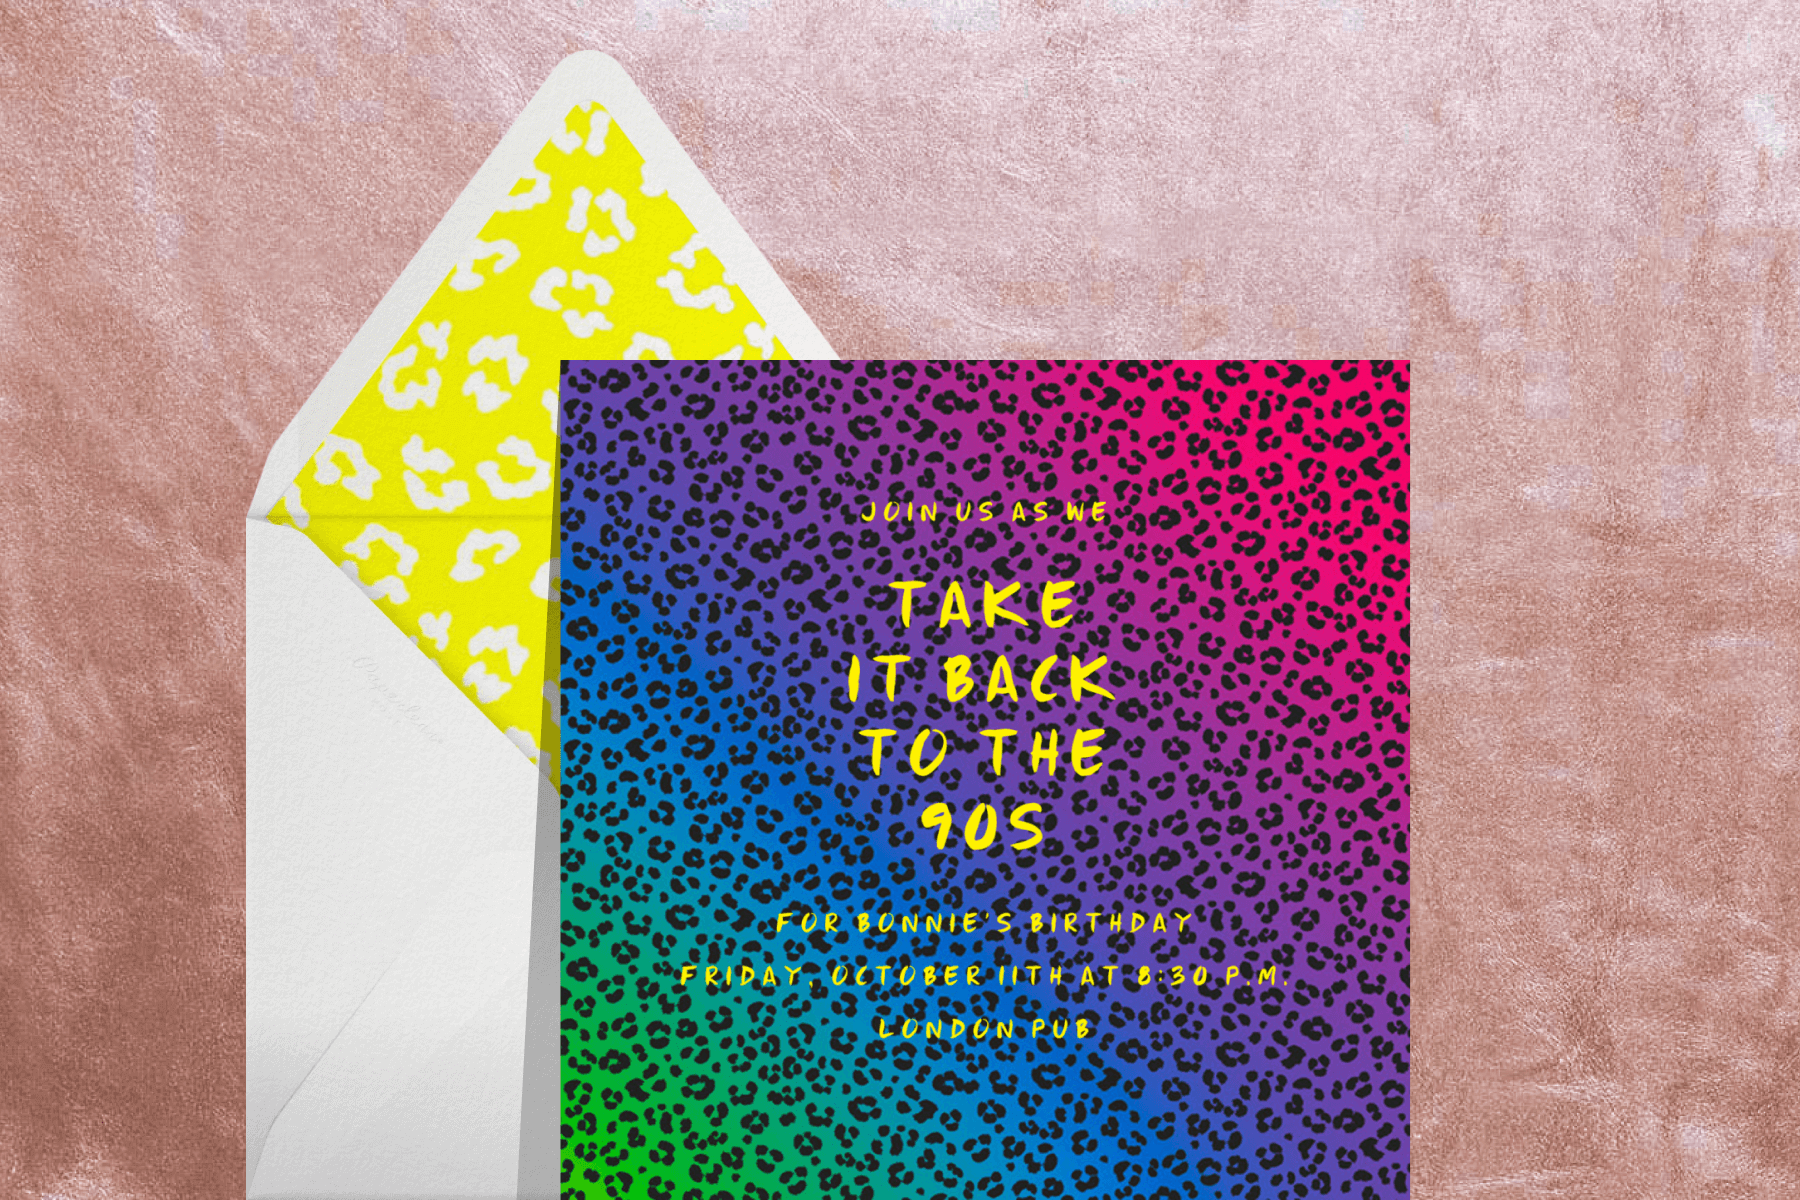 An invitation with rainbow cheetah print background.